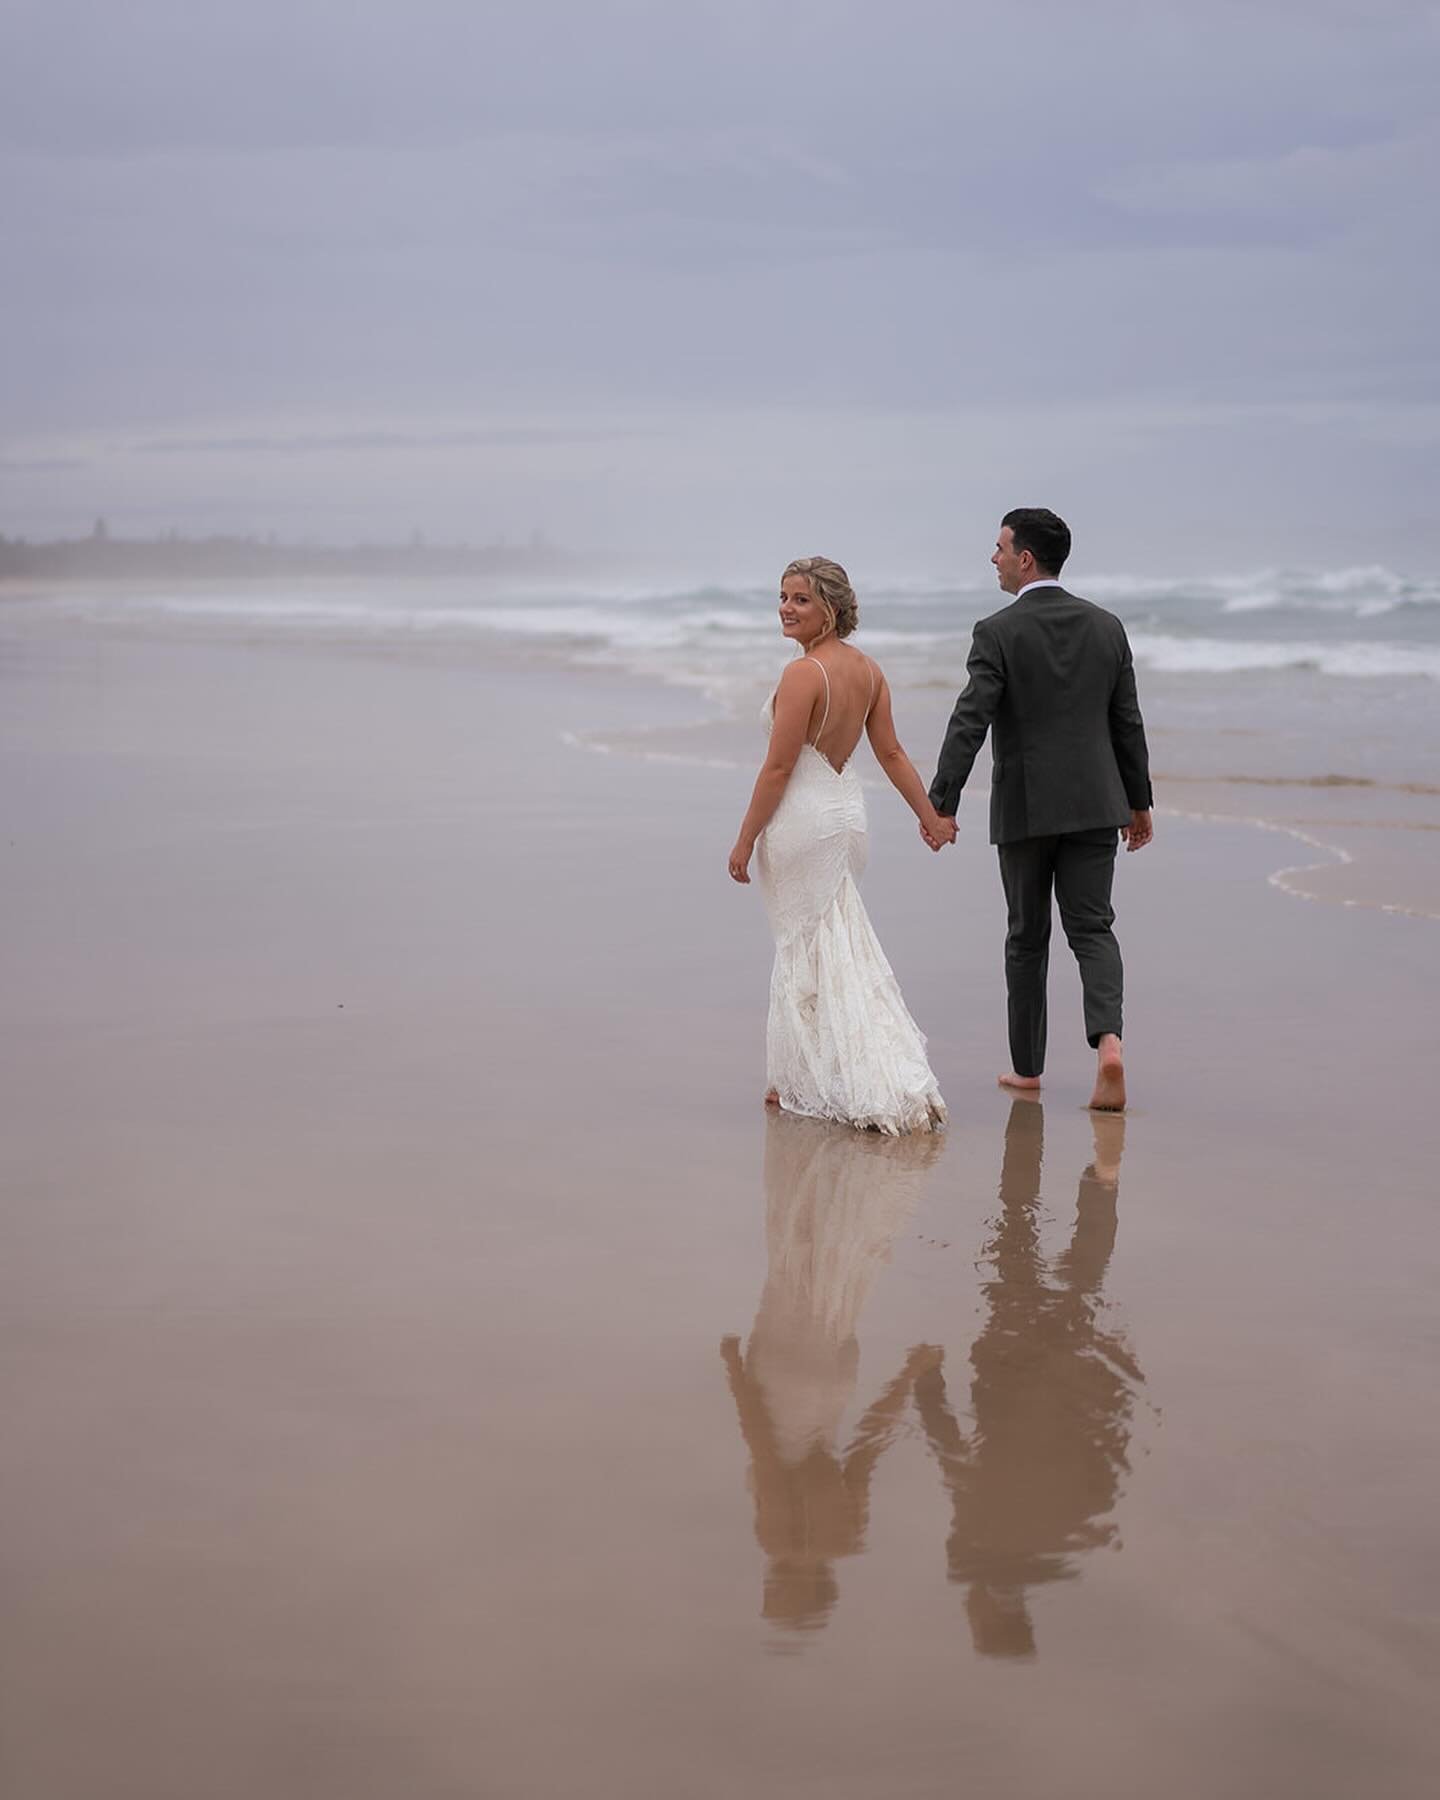 Claire + Alastair&rsquo;s beautiful beachside wedding 🤍

Wedding suppliers:

Photographer + Videographer @figtreepictures
Venue @barefootatbroken
Dress @grace_loves_lace

#beachwedding #byronbaywedding #byronbayweddingphotographer